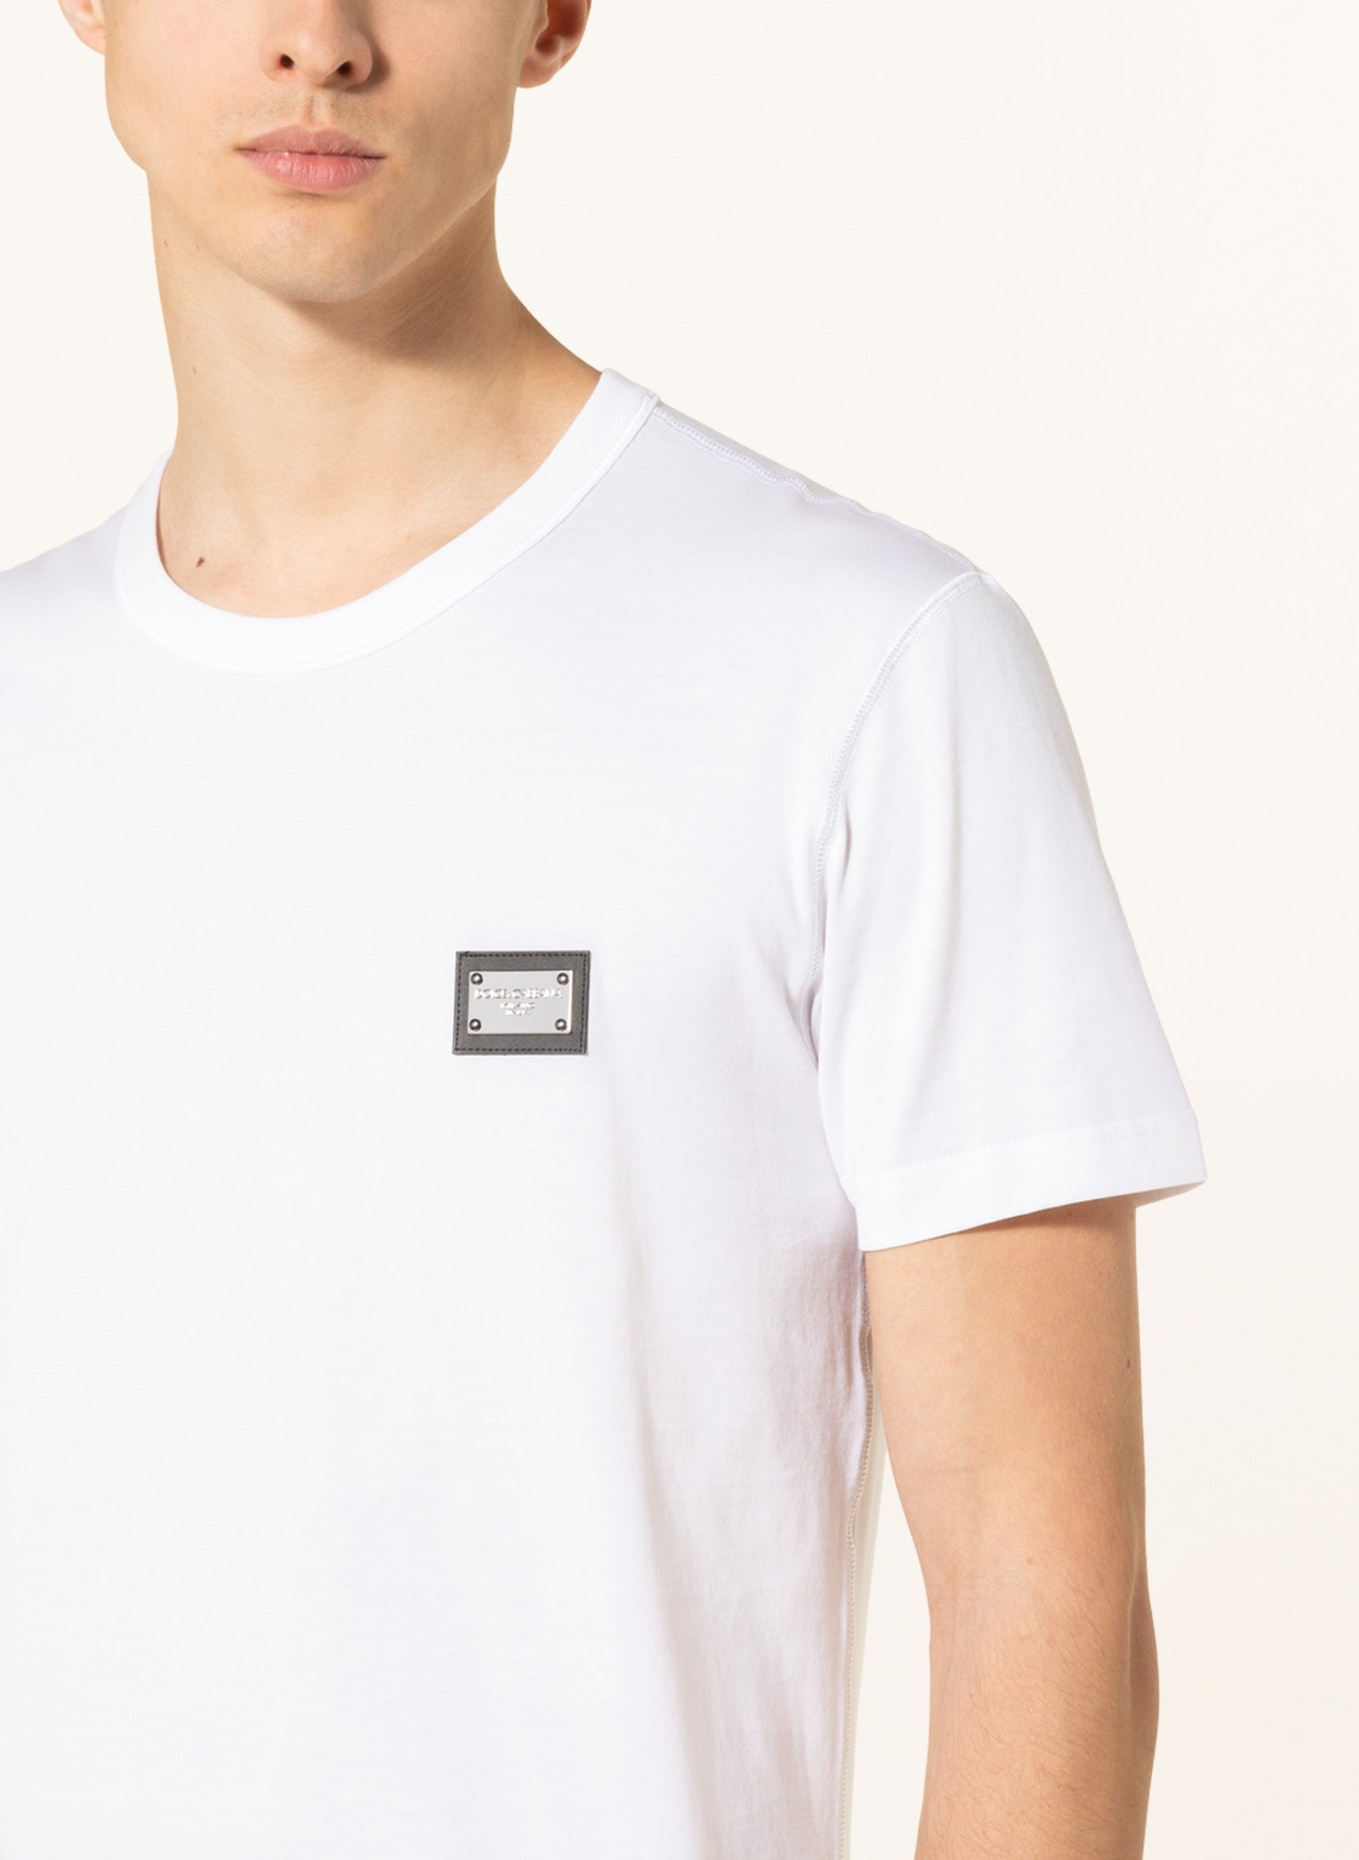 DOLCE & GABBANA T-shirt, Color: WHITE (Image 4)